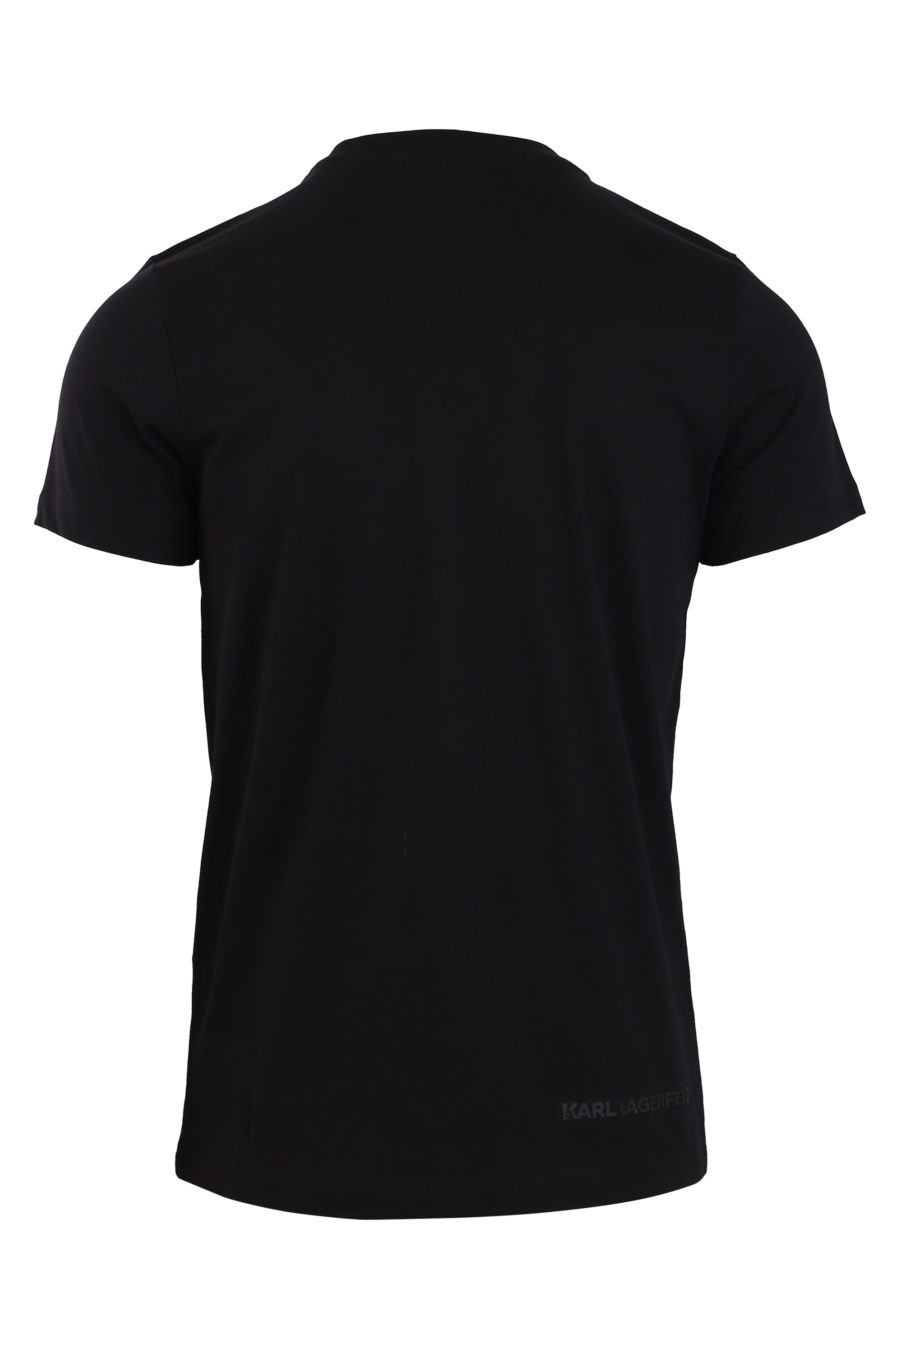 Black T-shirt with blue maxi logo - IMG 0828